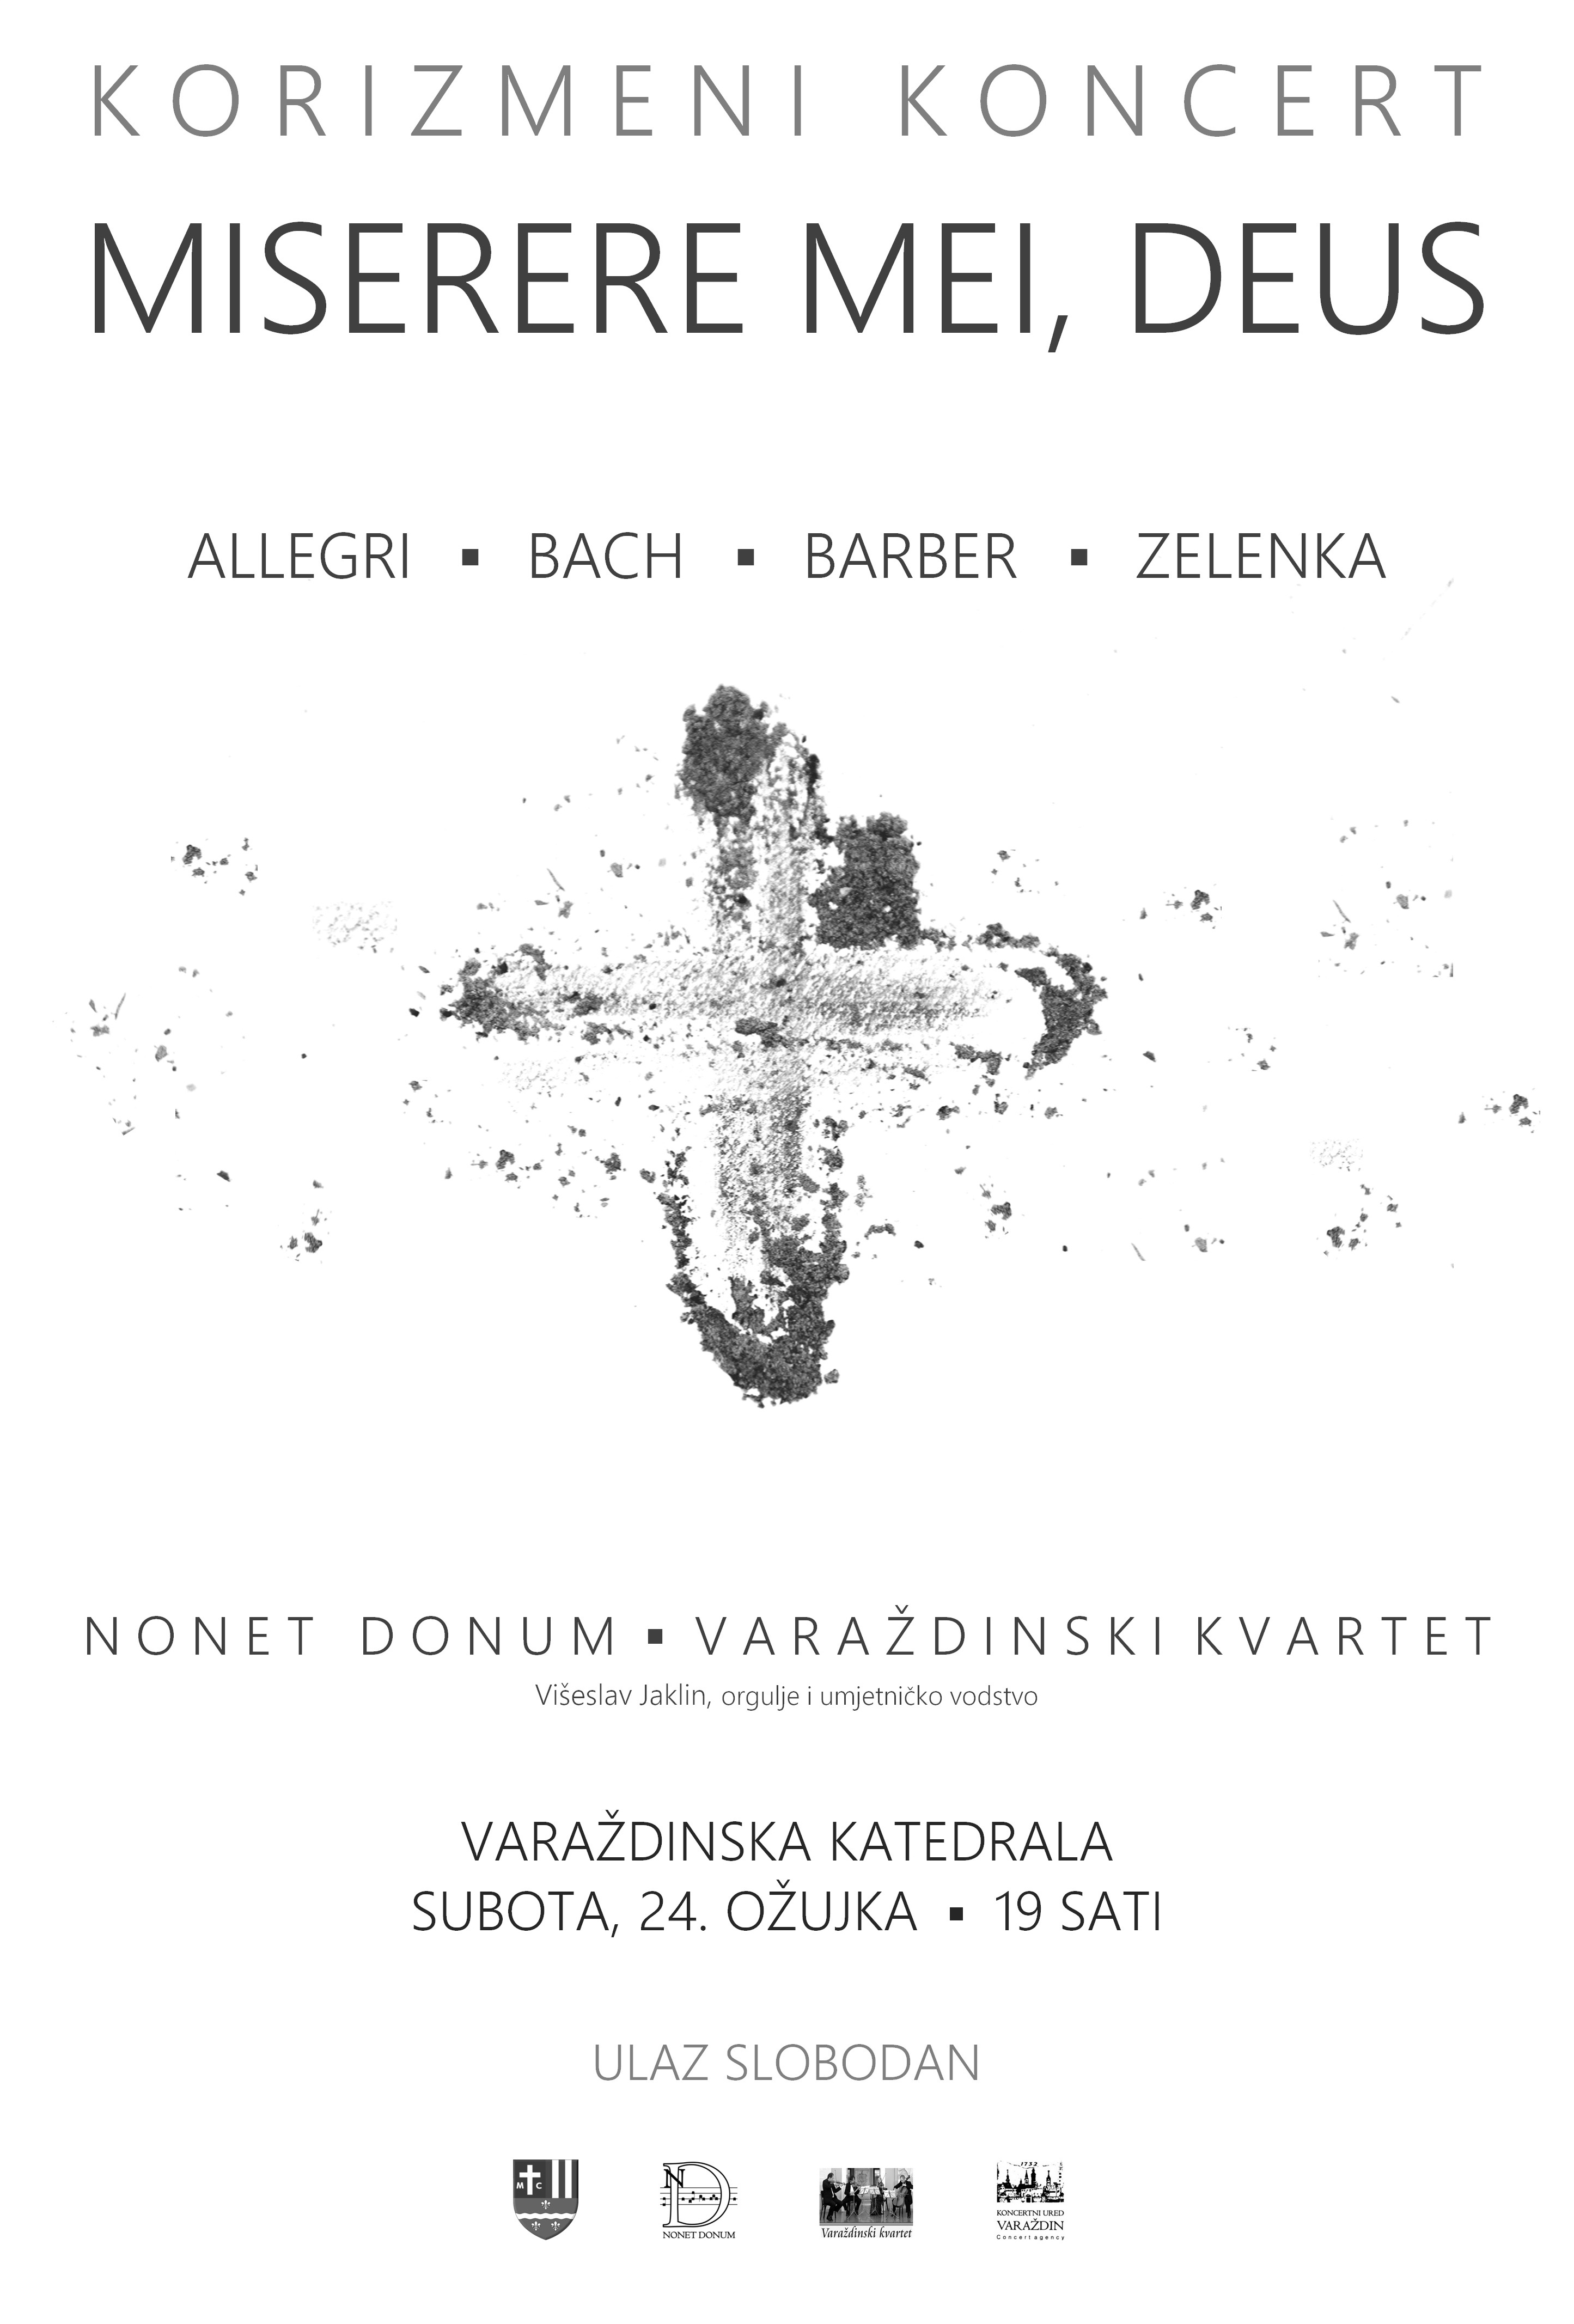 Korizmeni koncert 2018